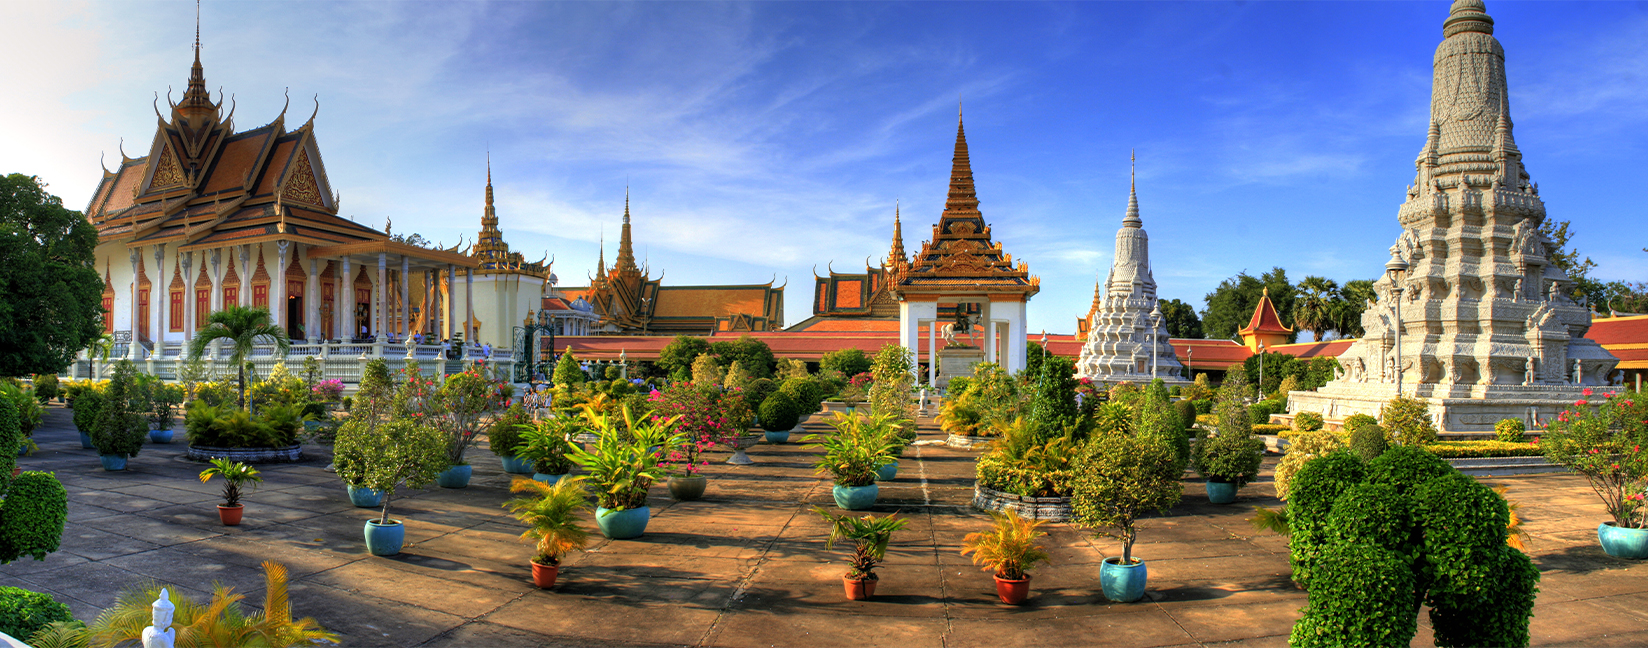 Cambodia Temples Tours